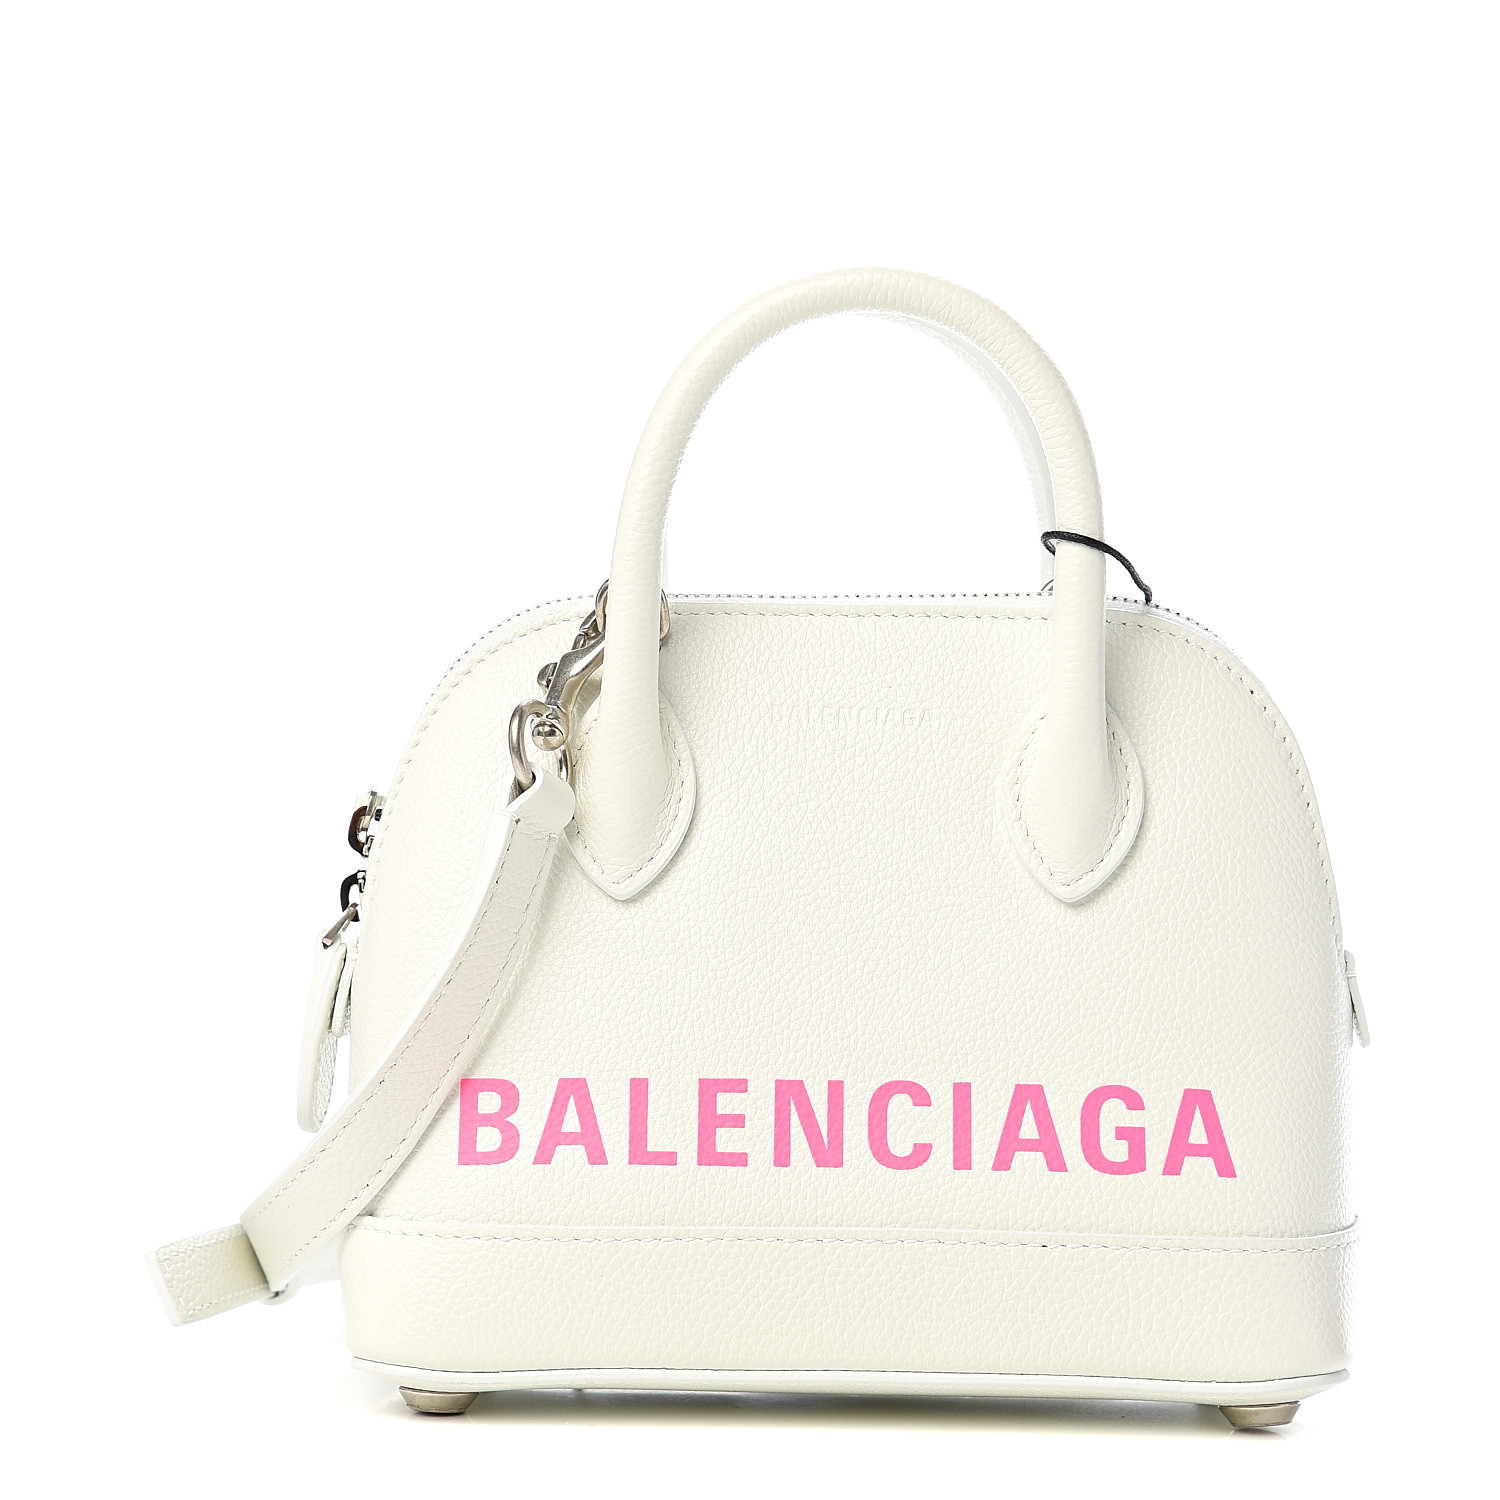 white and pink balenciaga bag